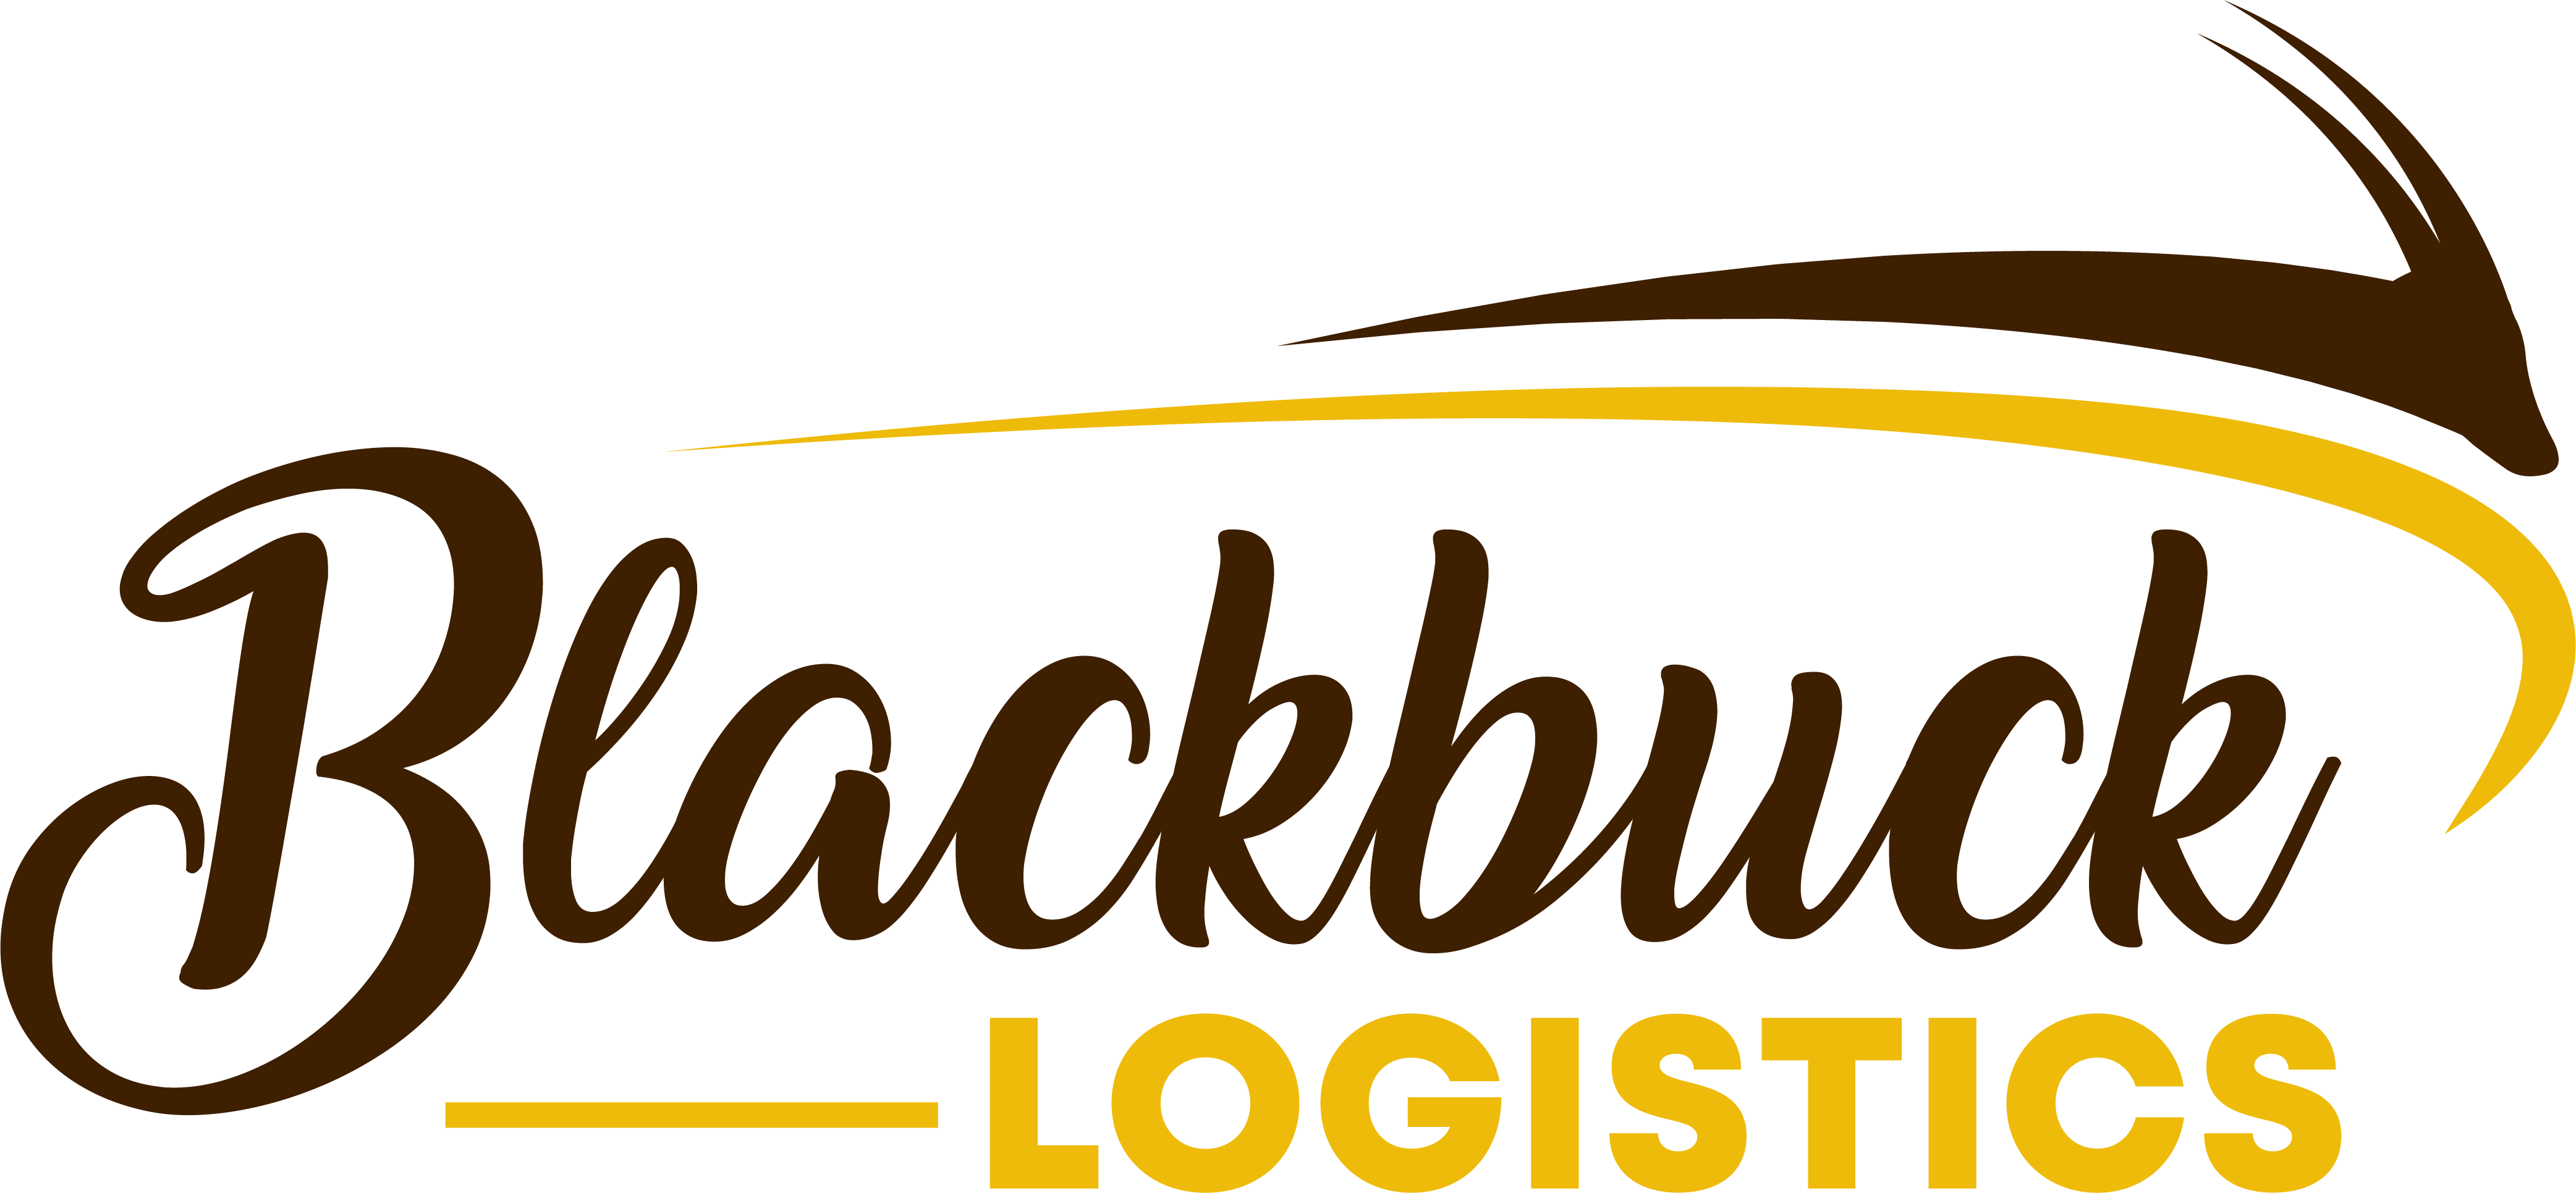 Blackbuck Logistics Inc.